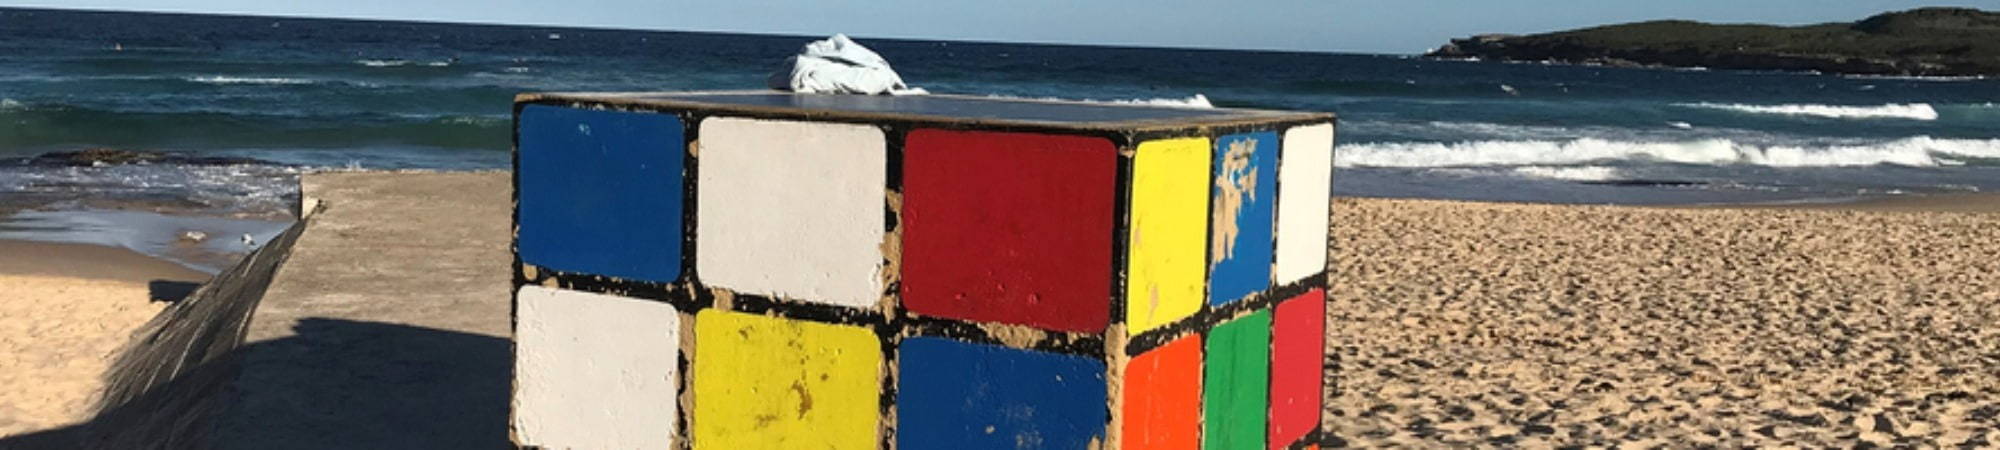 Rubik's cube on Maroubra beach